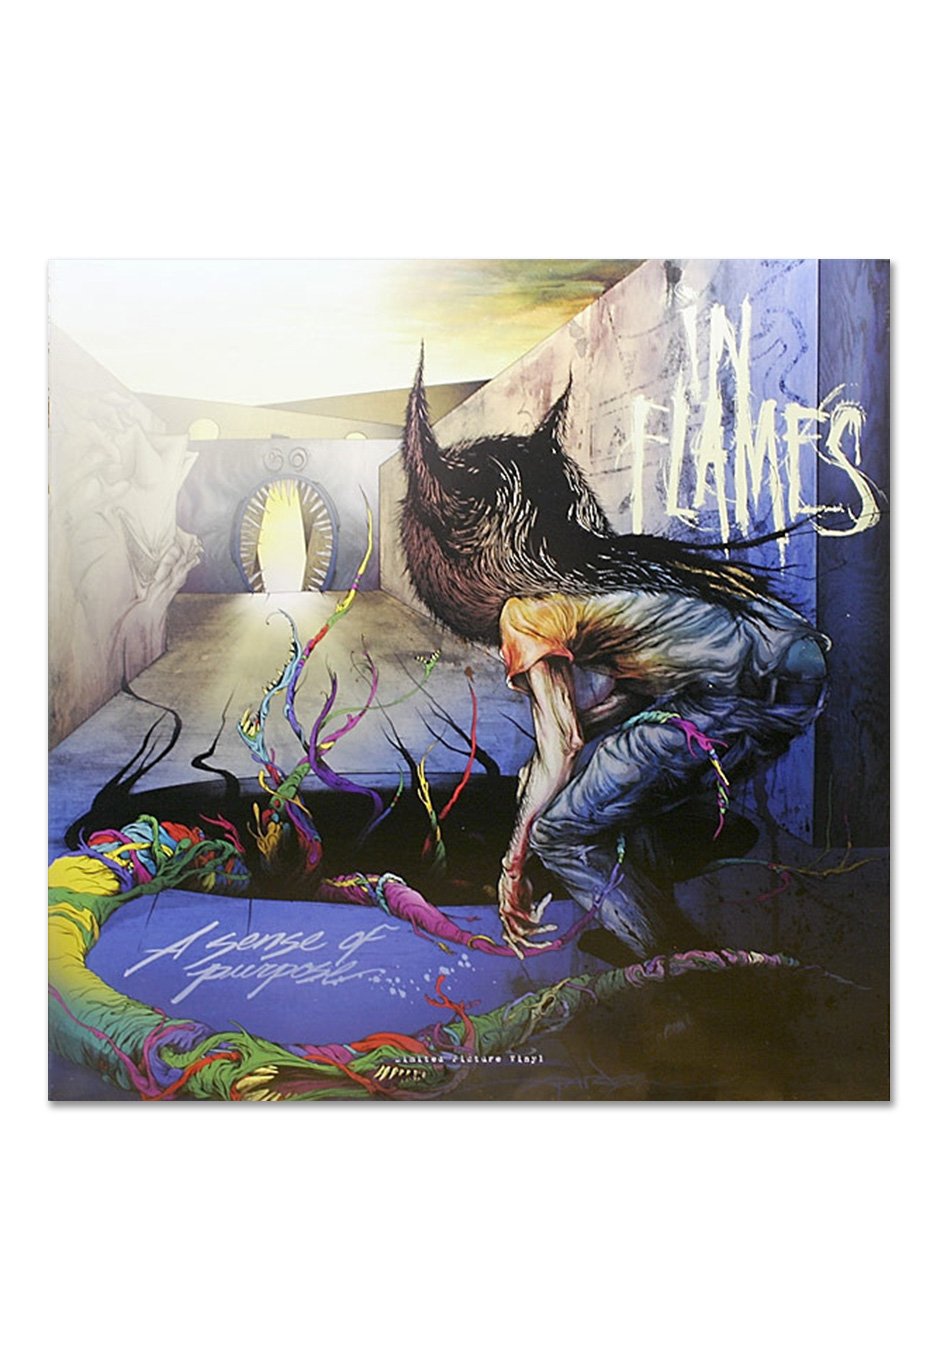 In Flames - A Sense Of Purpose + The Mirror's Truth Ltd. Transparent Ocean Blue - Colored 2 Vinyl